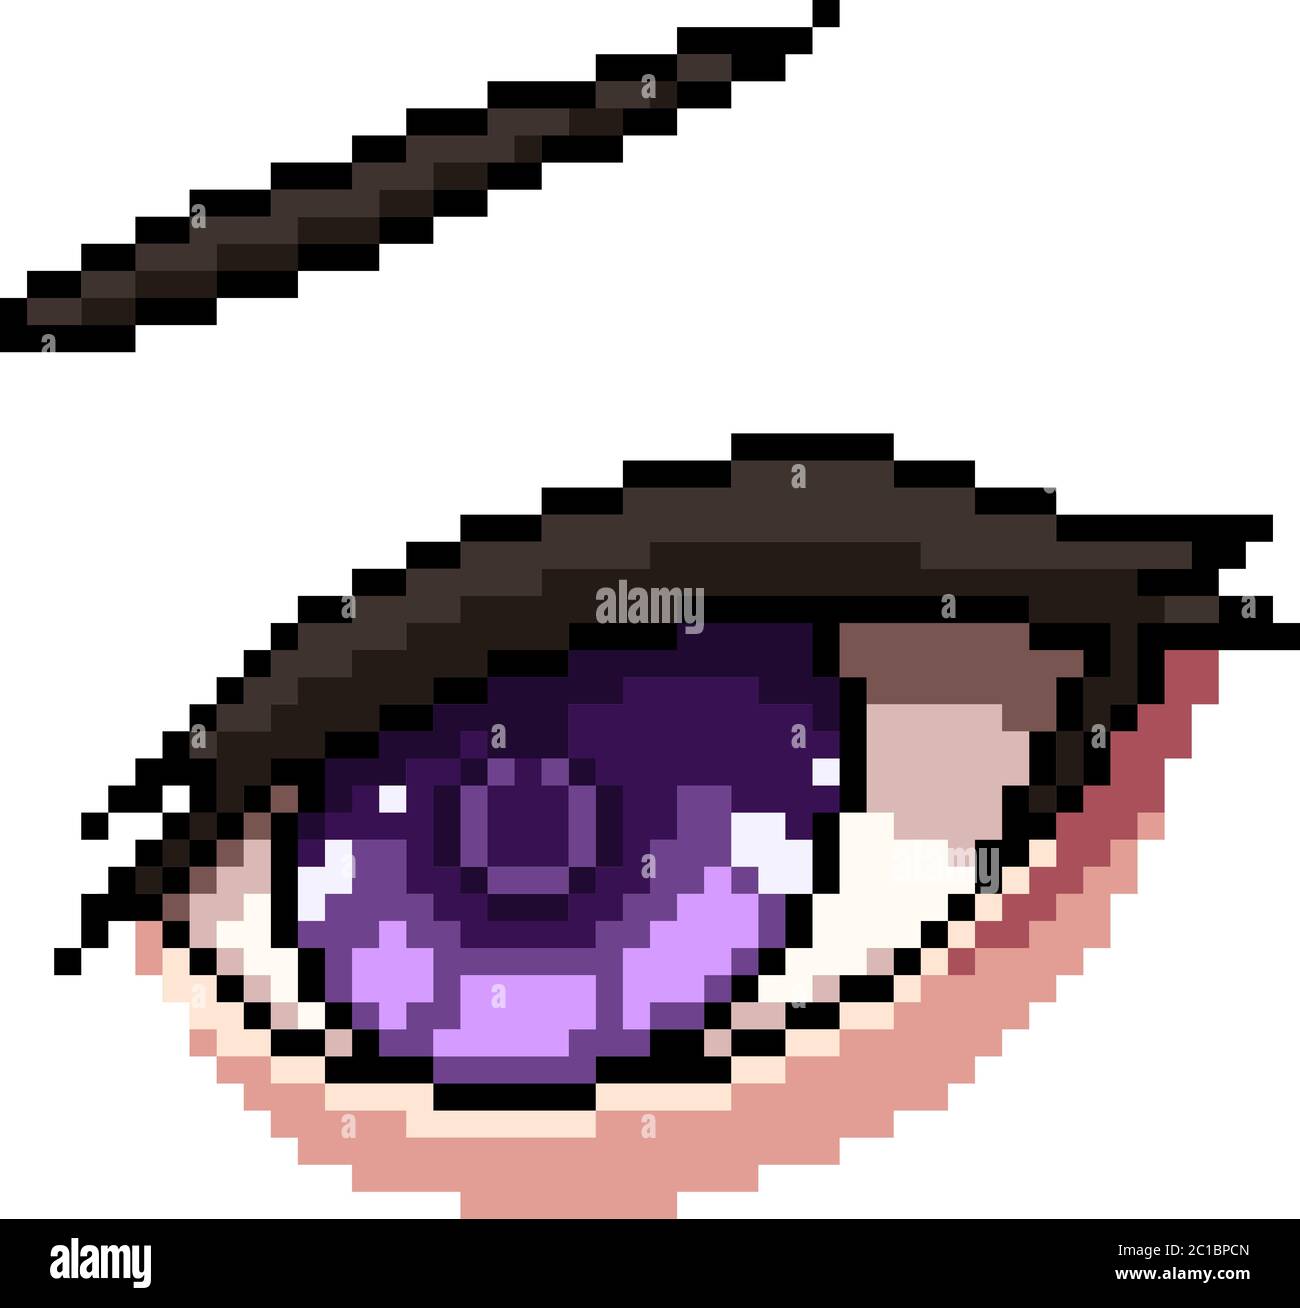 Anime Eyes in 32x32. : r/PixelArt